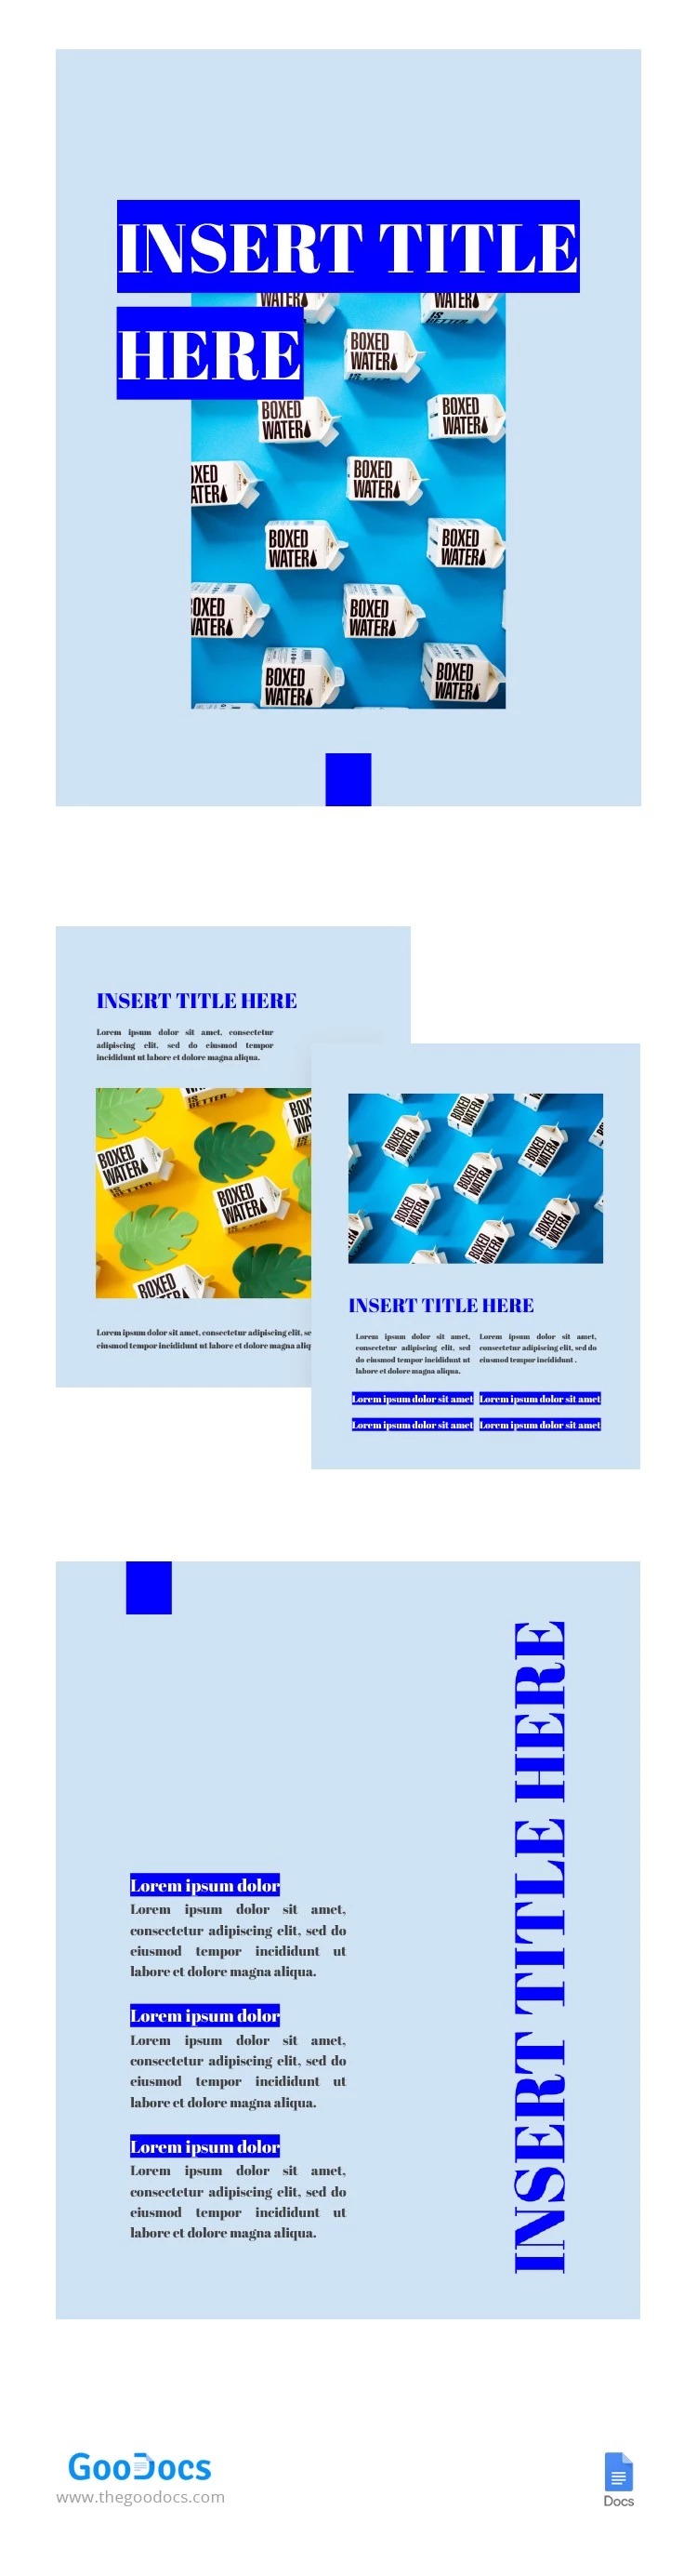 Carnet Bleu - free Google Docs Template - 10062418